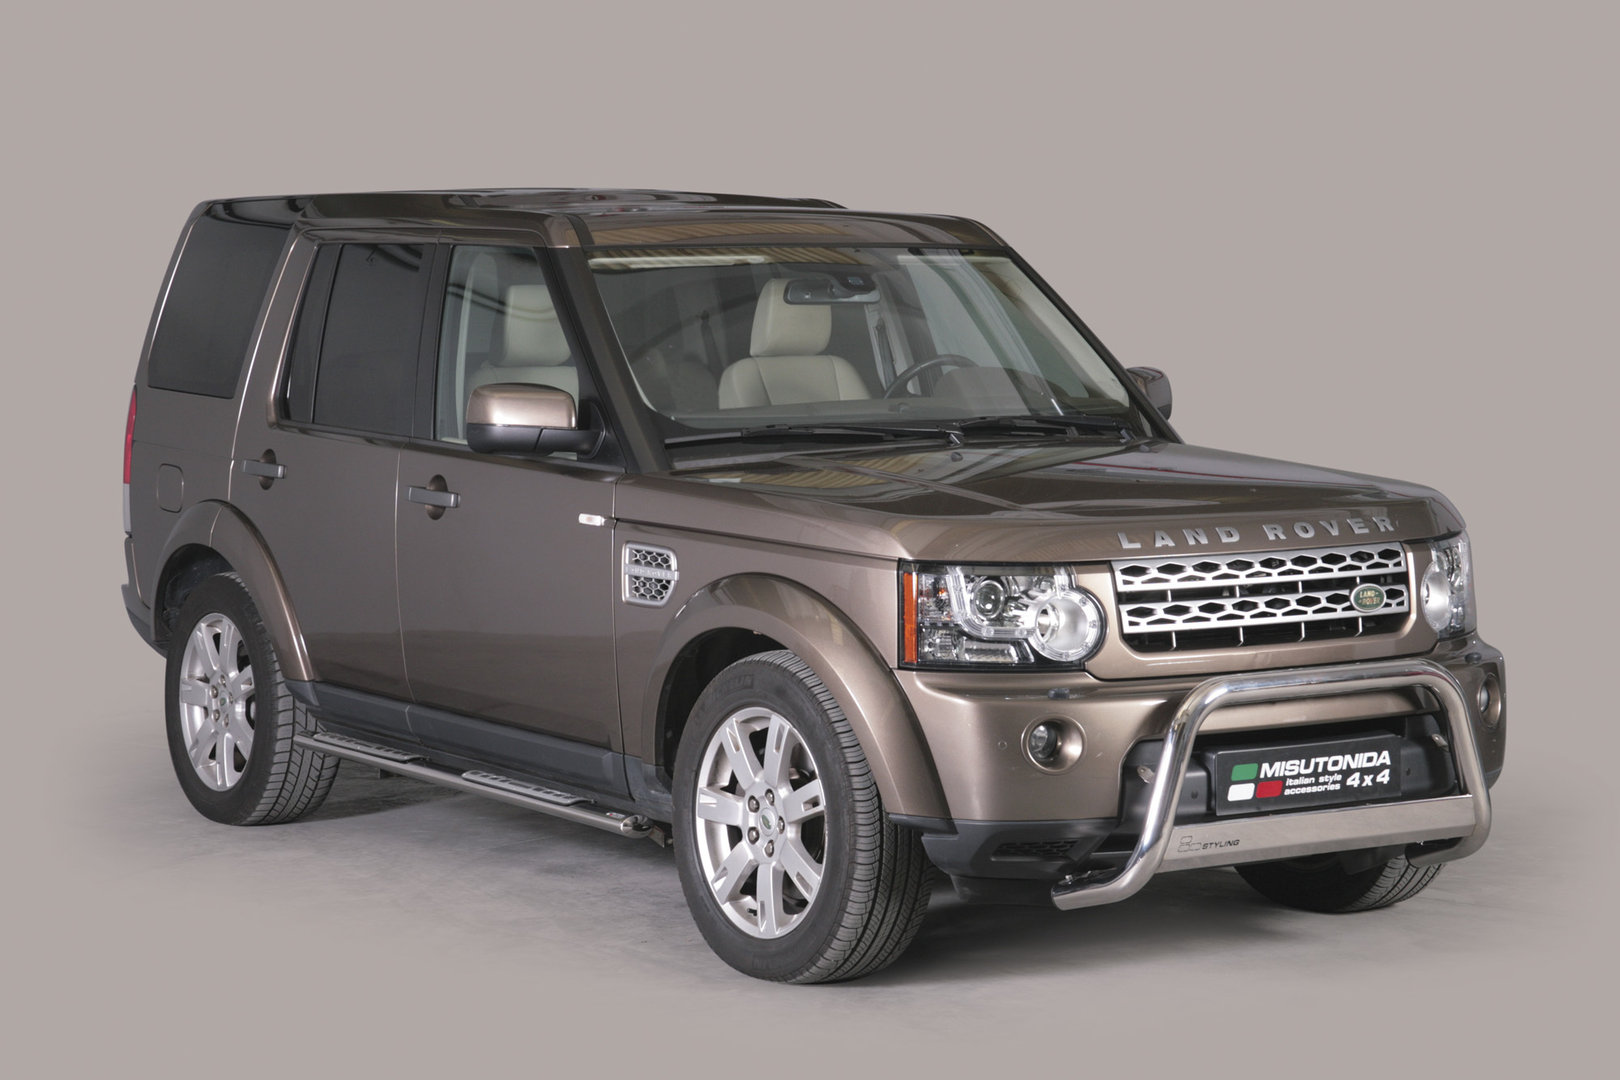 Land Rover Discovery 4 EU-Valorauta (Misutonida)